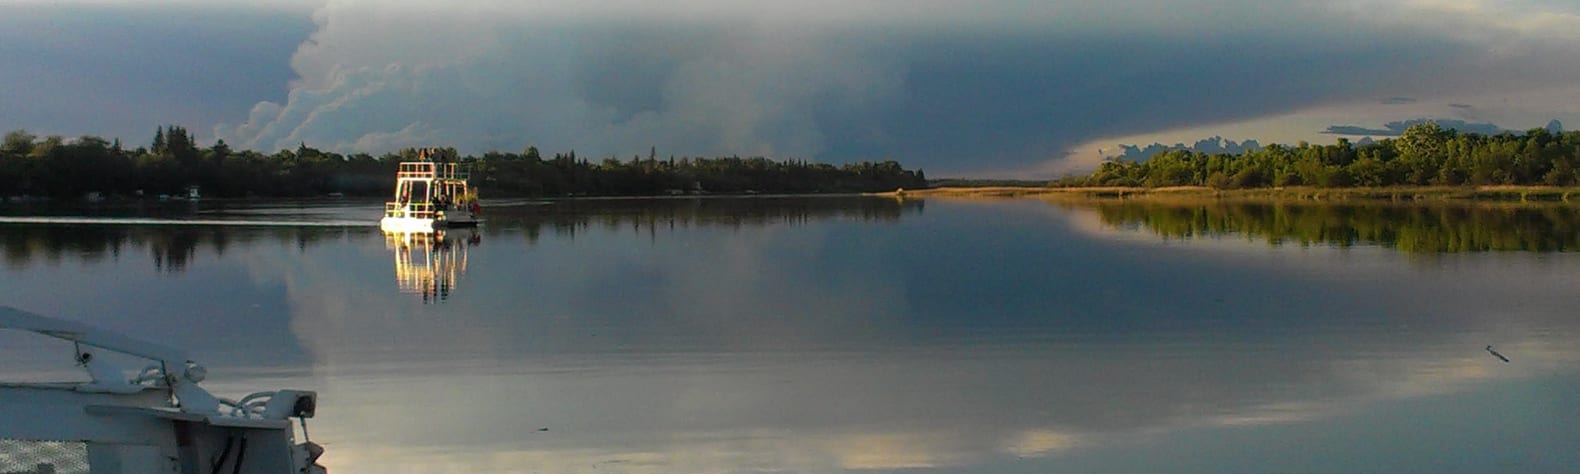 Pike Lake Provincial Park